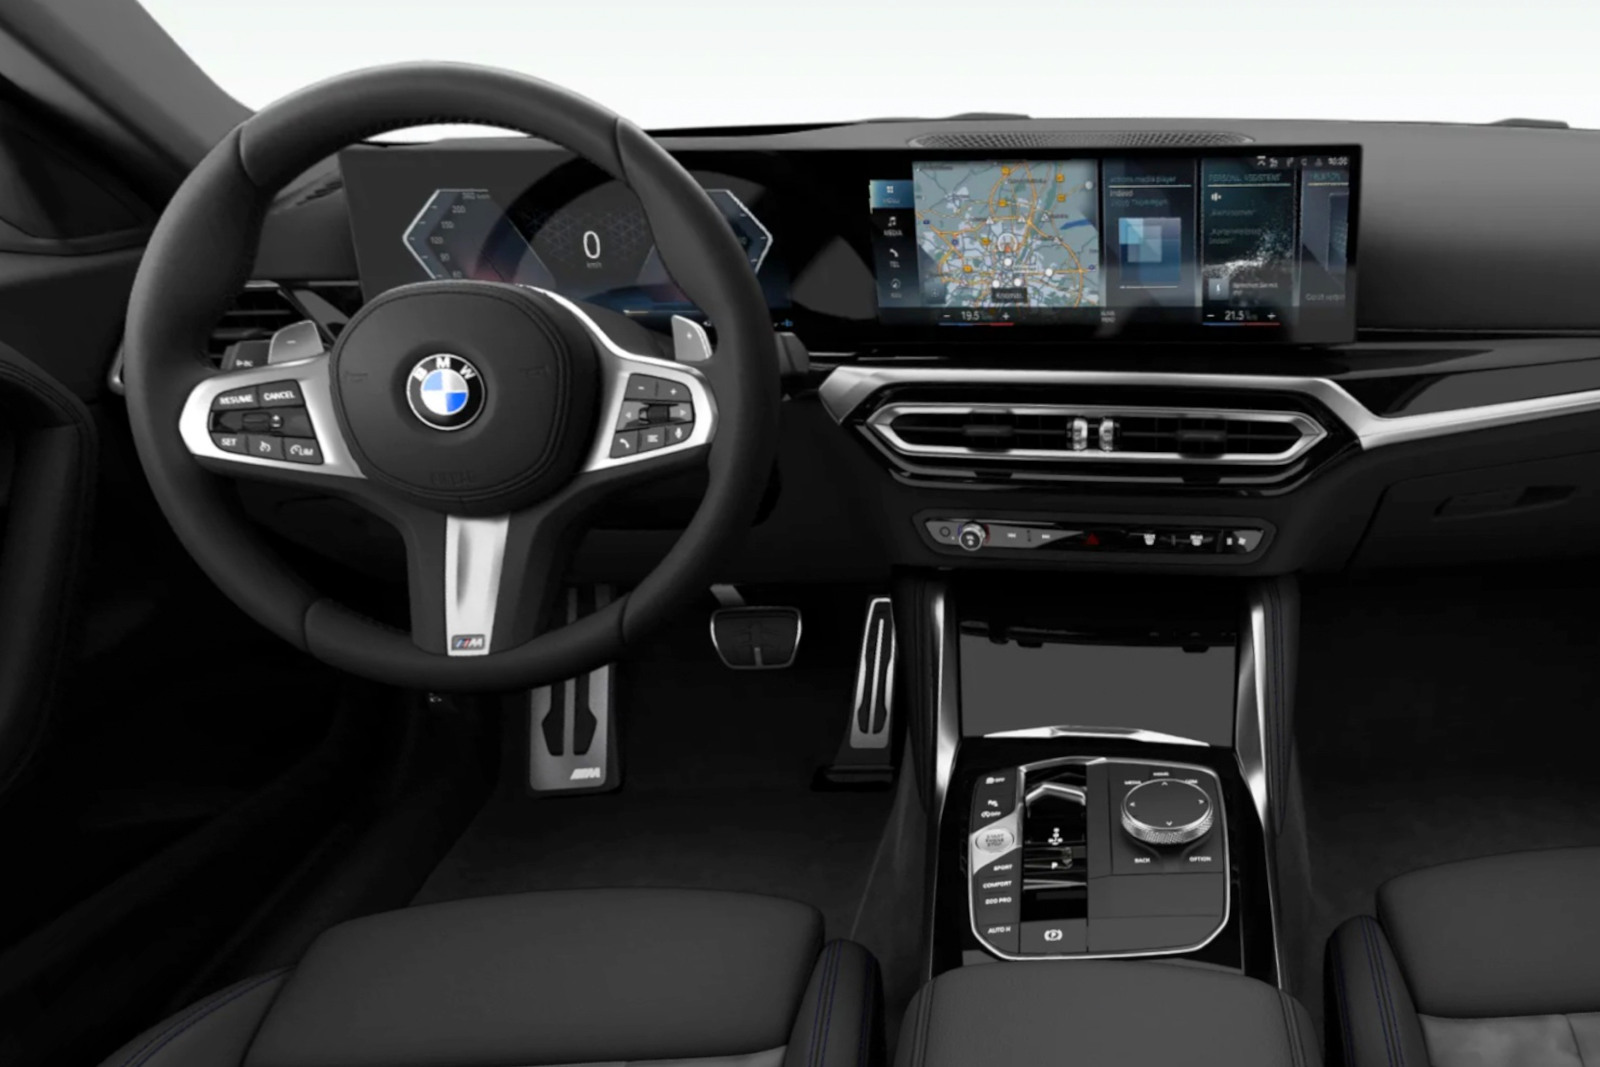 BMW 2er Coupé: Konfigurator zeigt G42 mit Curved Display